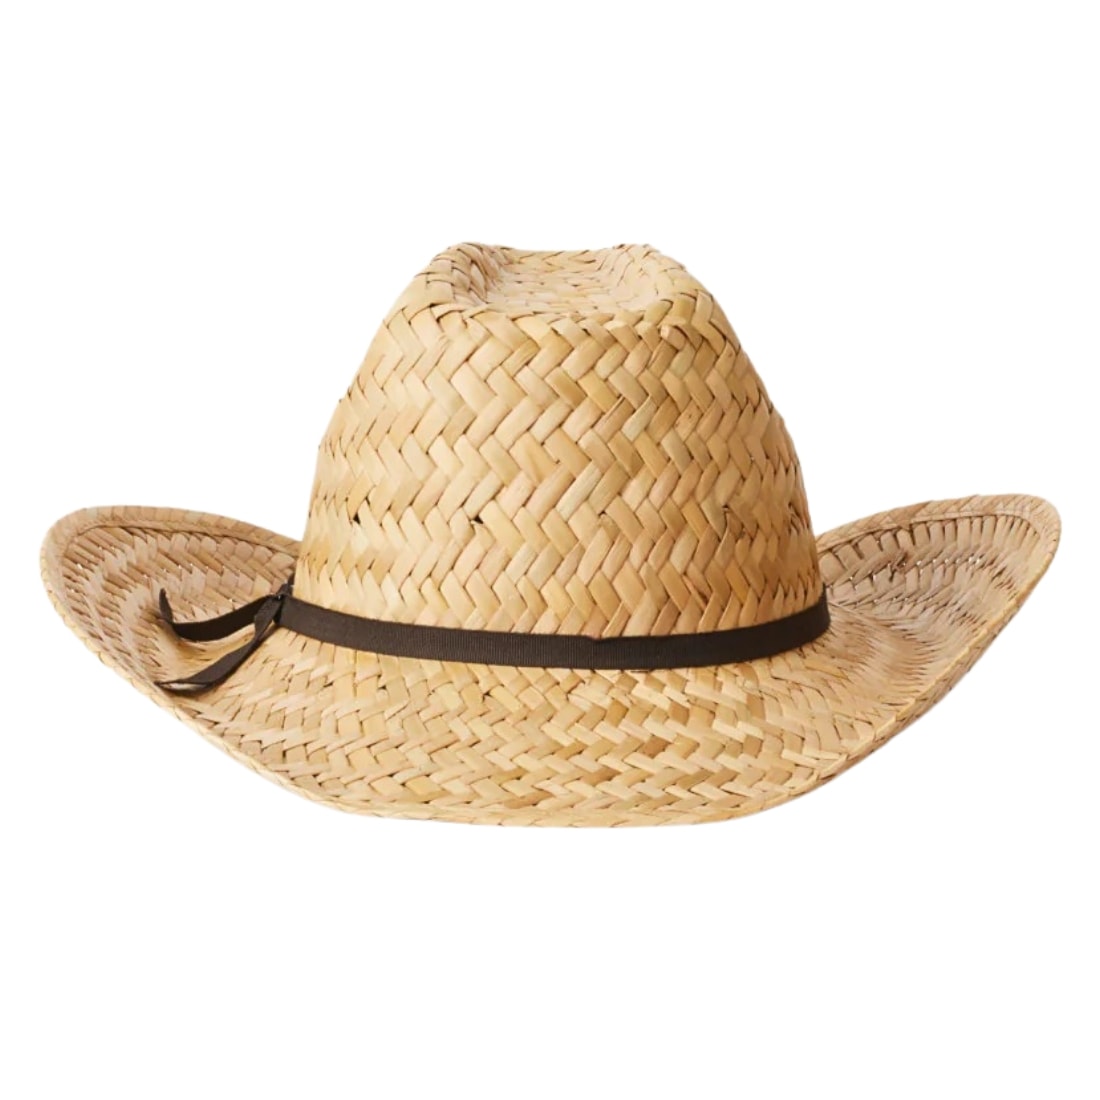 Brixton Houston Straw Cowboy Hat - Natural - Fedora/Trilby Hat by Brixton